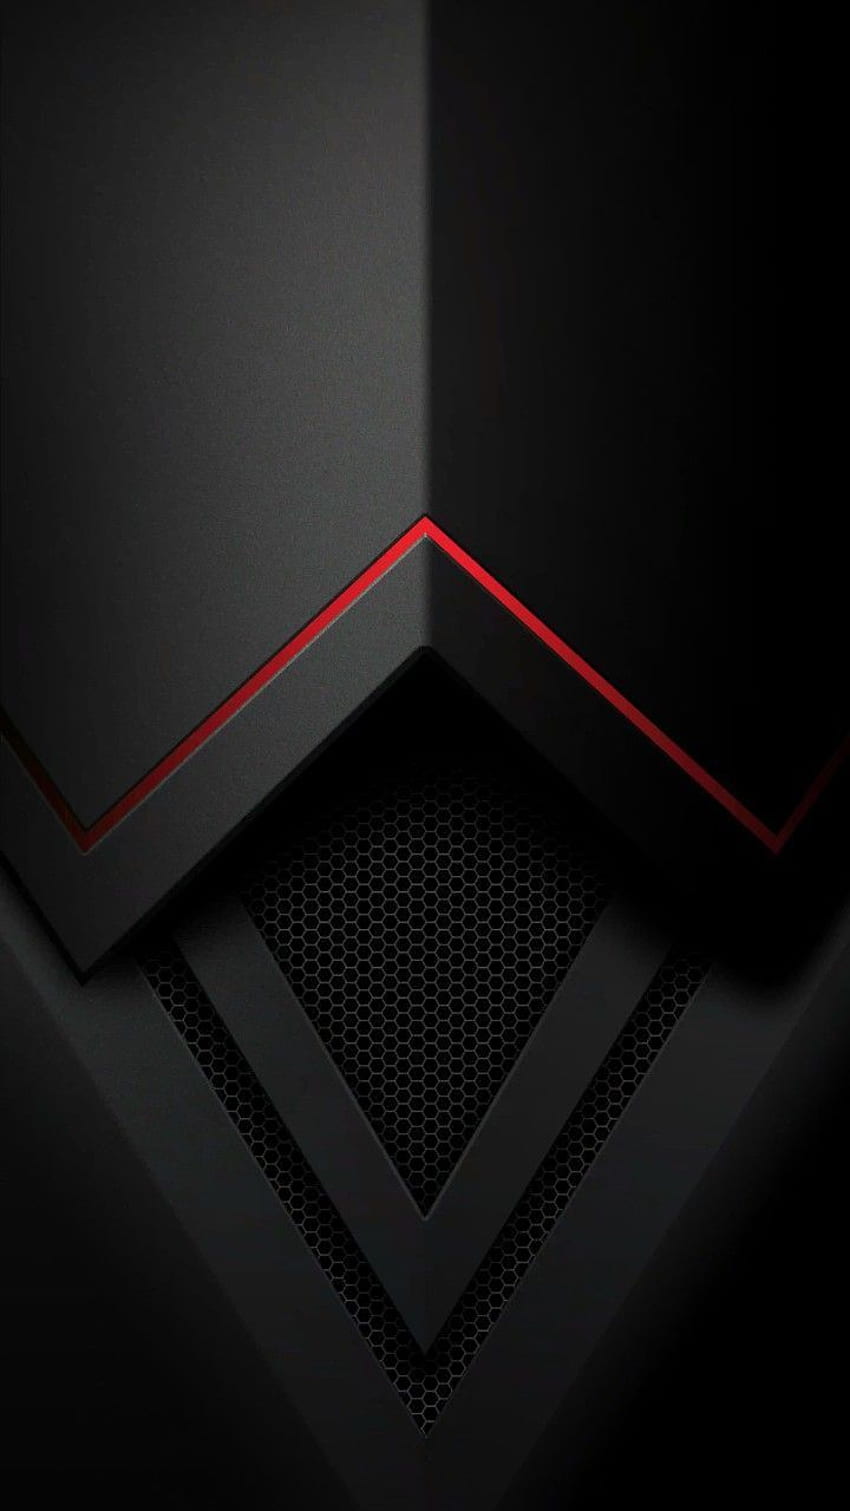 Luz roja JMC apagada, forma negra poligonal, detalle de diseño industrial, forma triangular. fondo de pantalla del teléfono